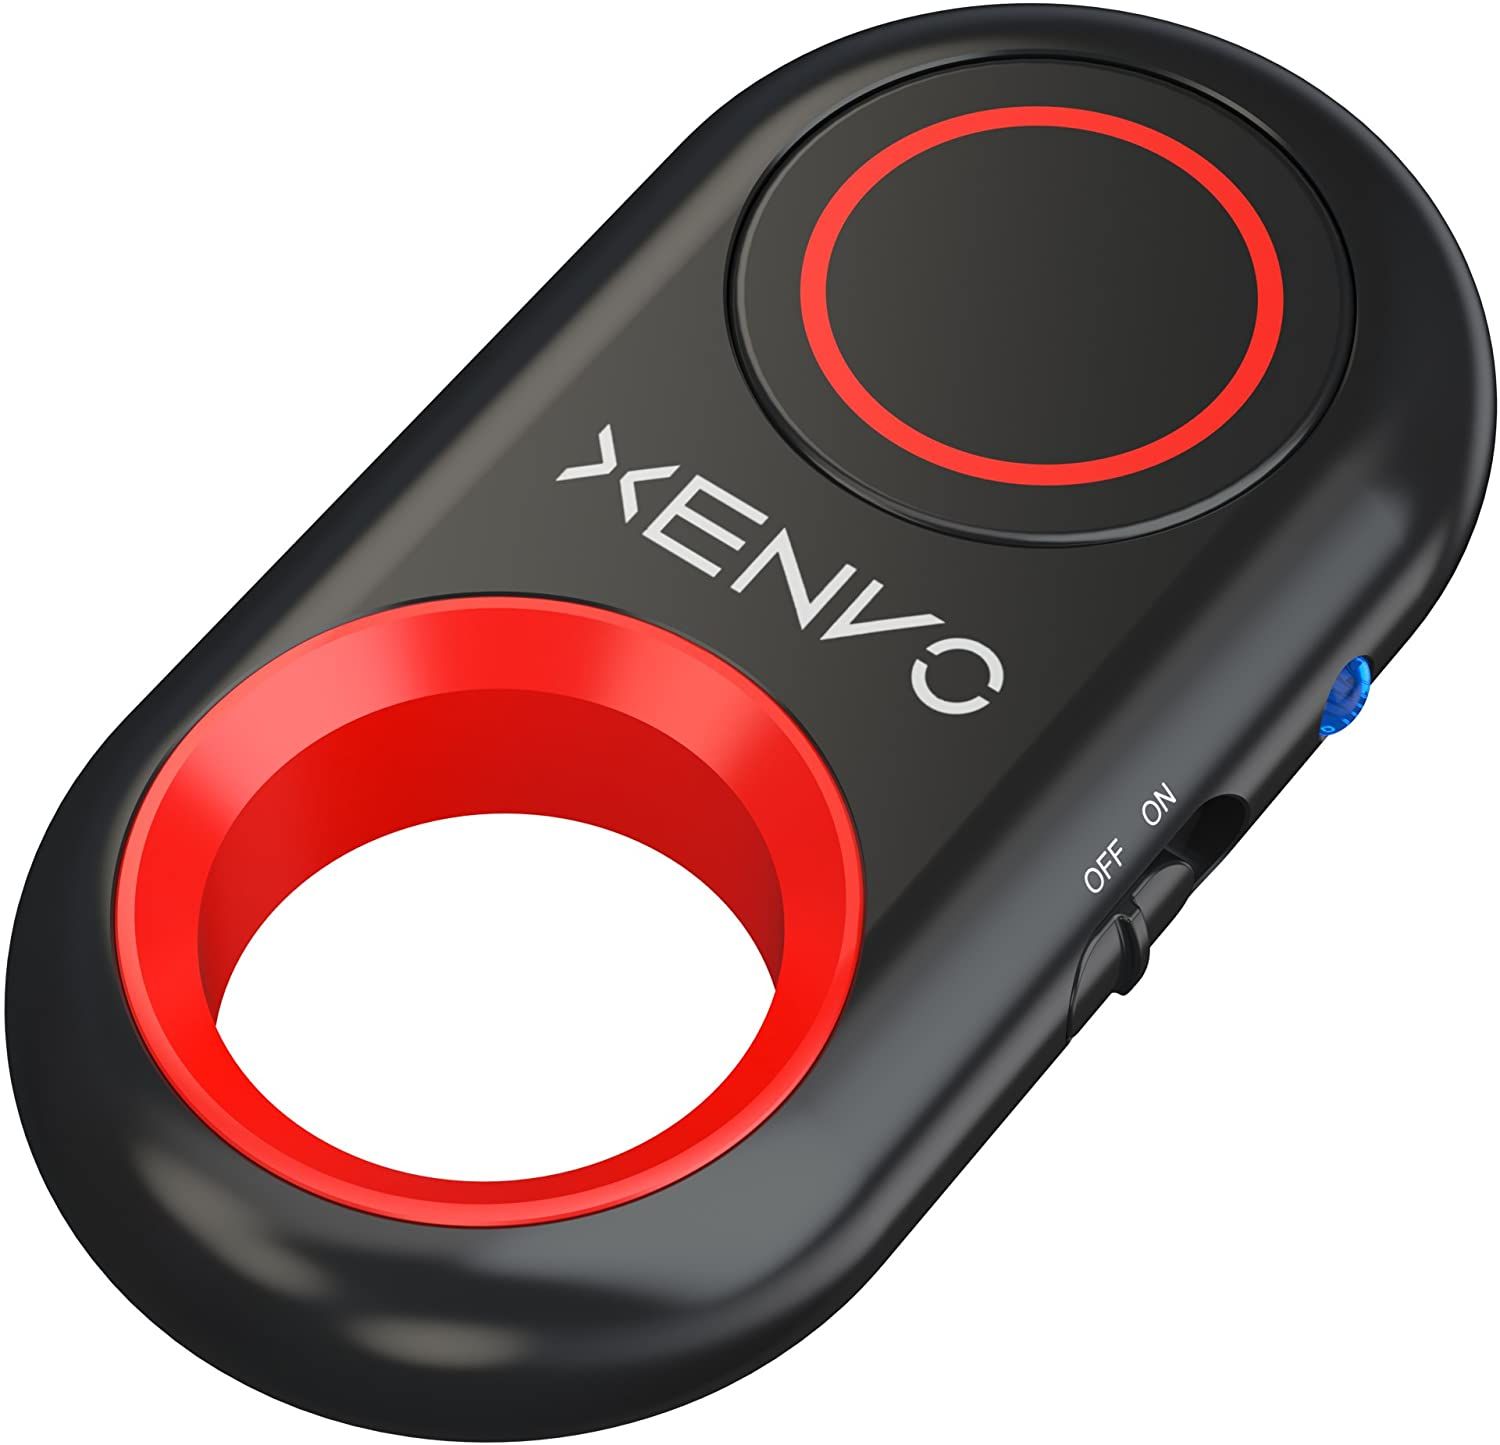 Xenvo Shutterbug wireless camera trigger